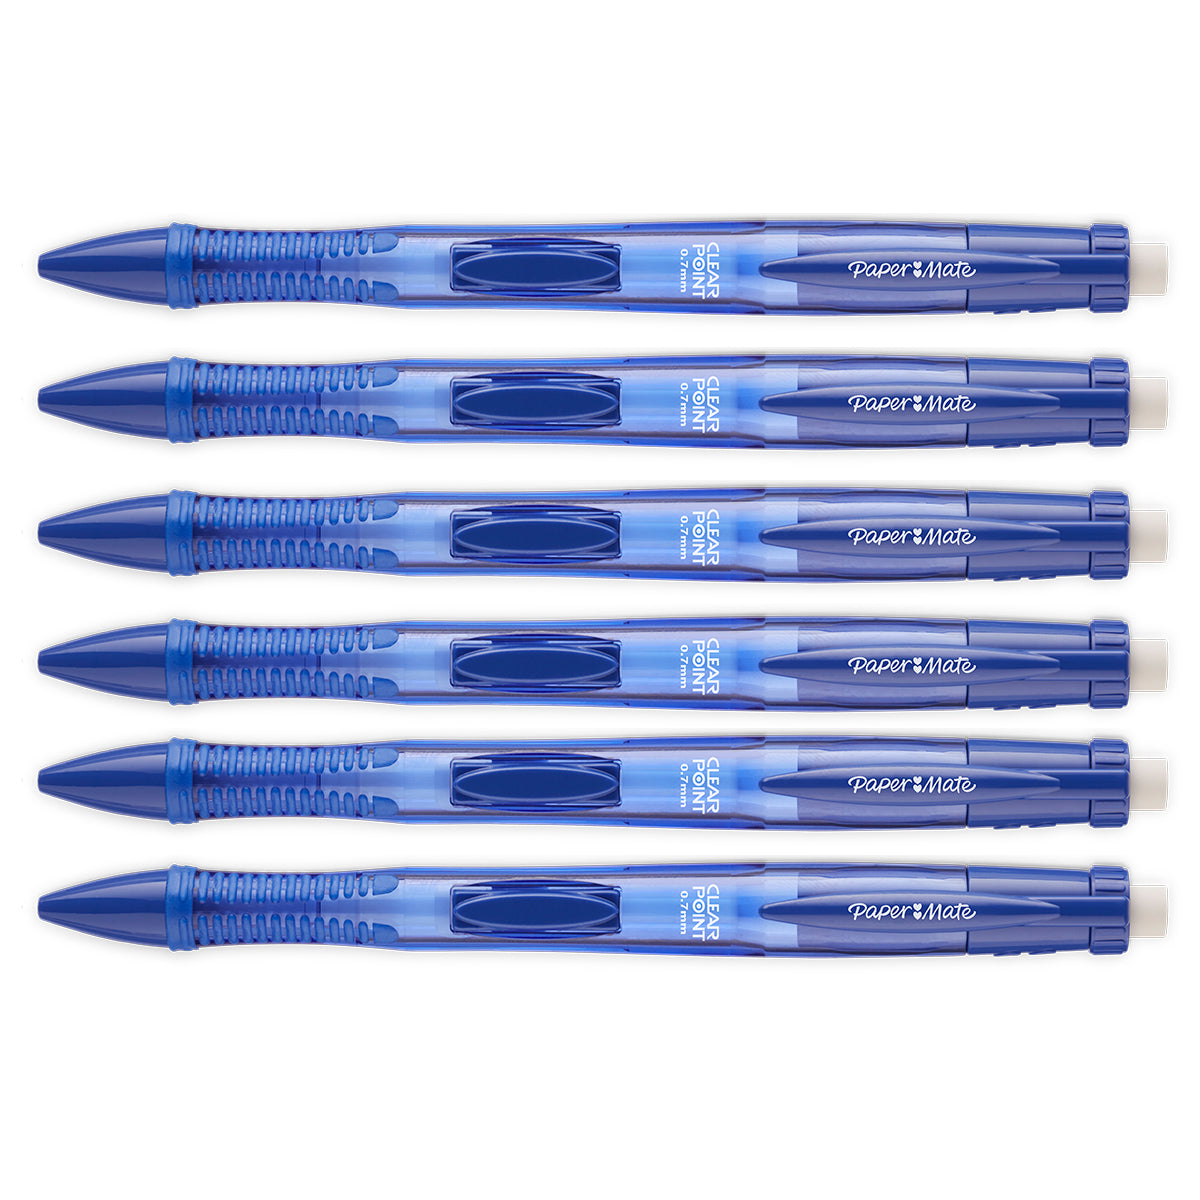  Mr. Pen - Pencil Pouch, Blue and Orange, 2 Fabric